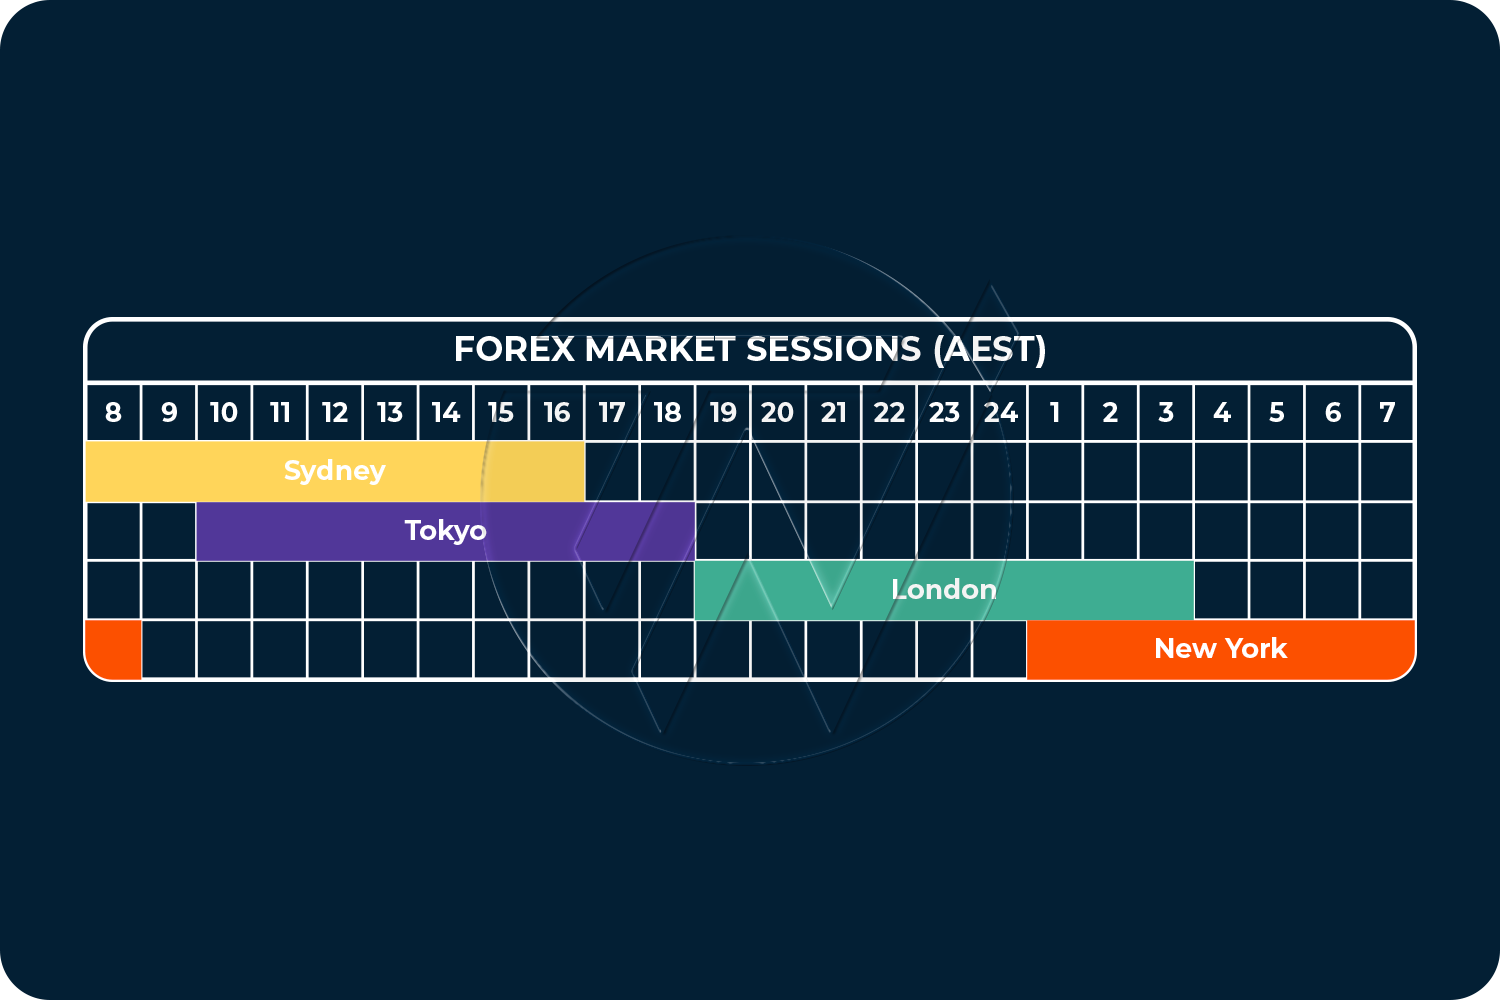 Forex market open times table showing major market open times in AEST